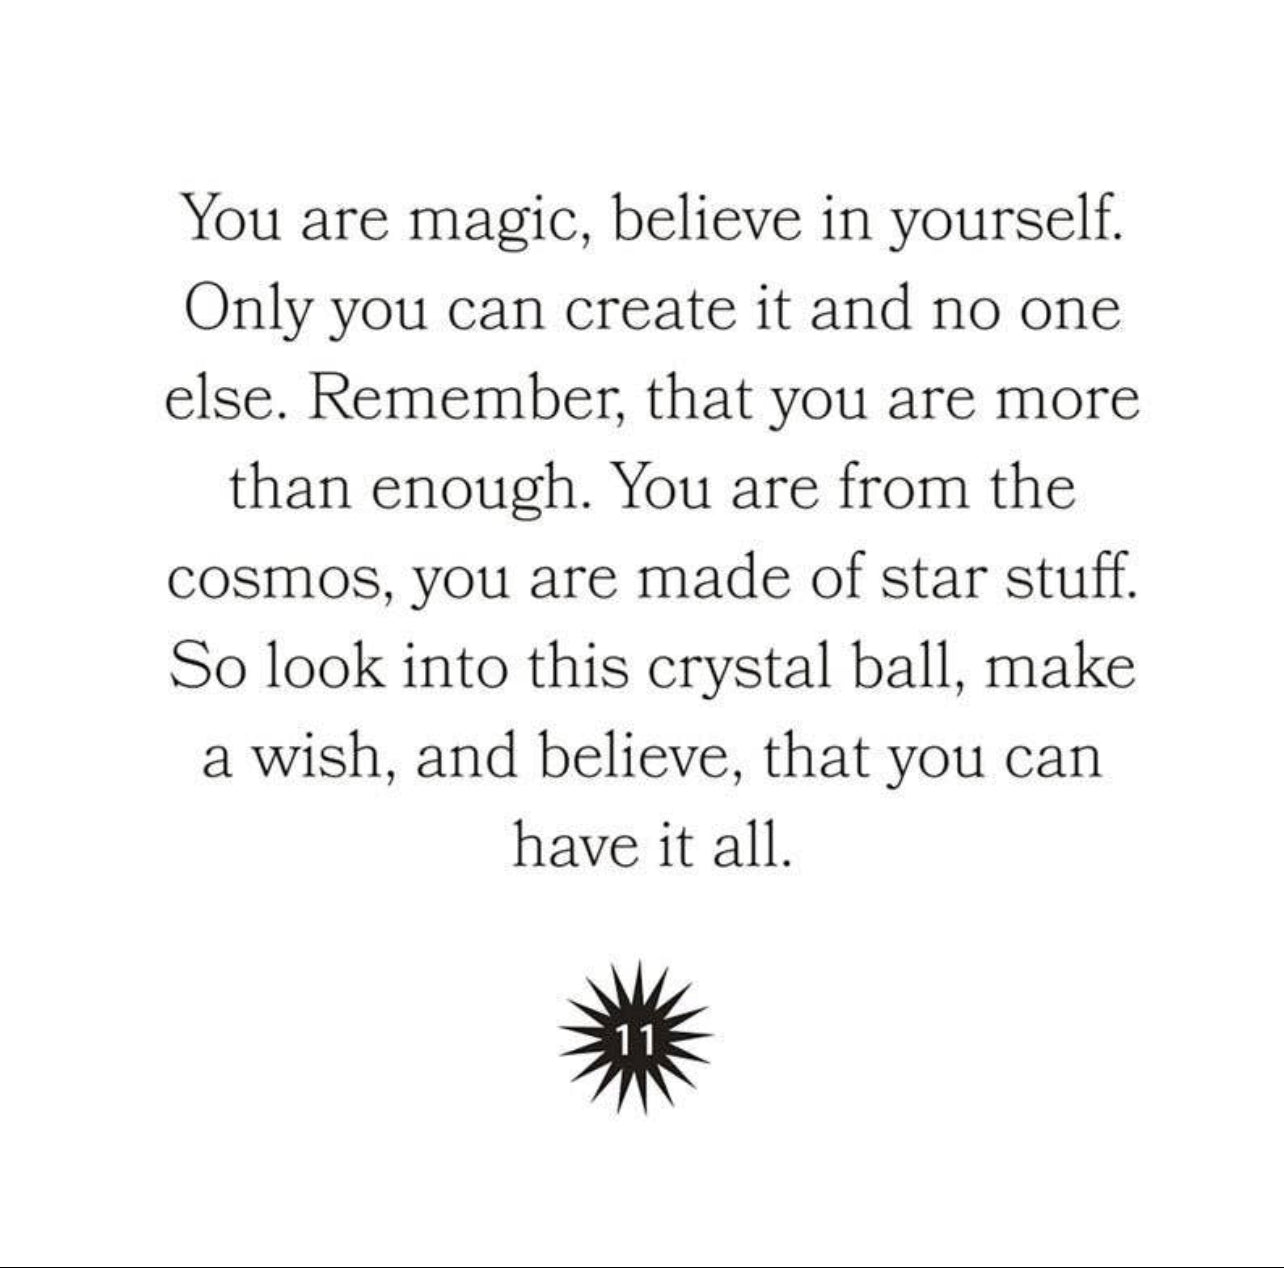 YOU ARE MAGIC